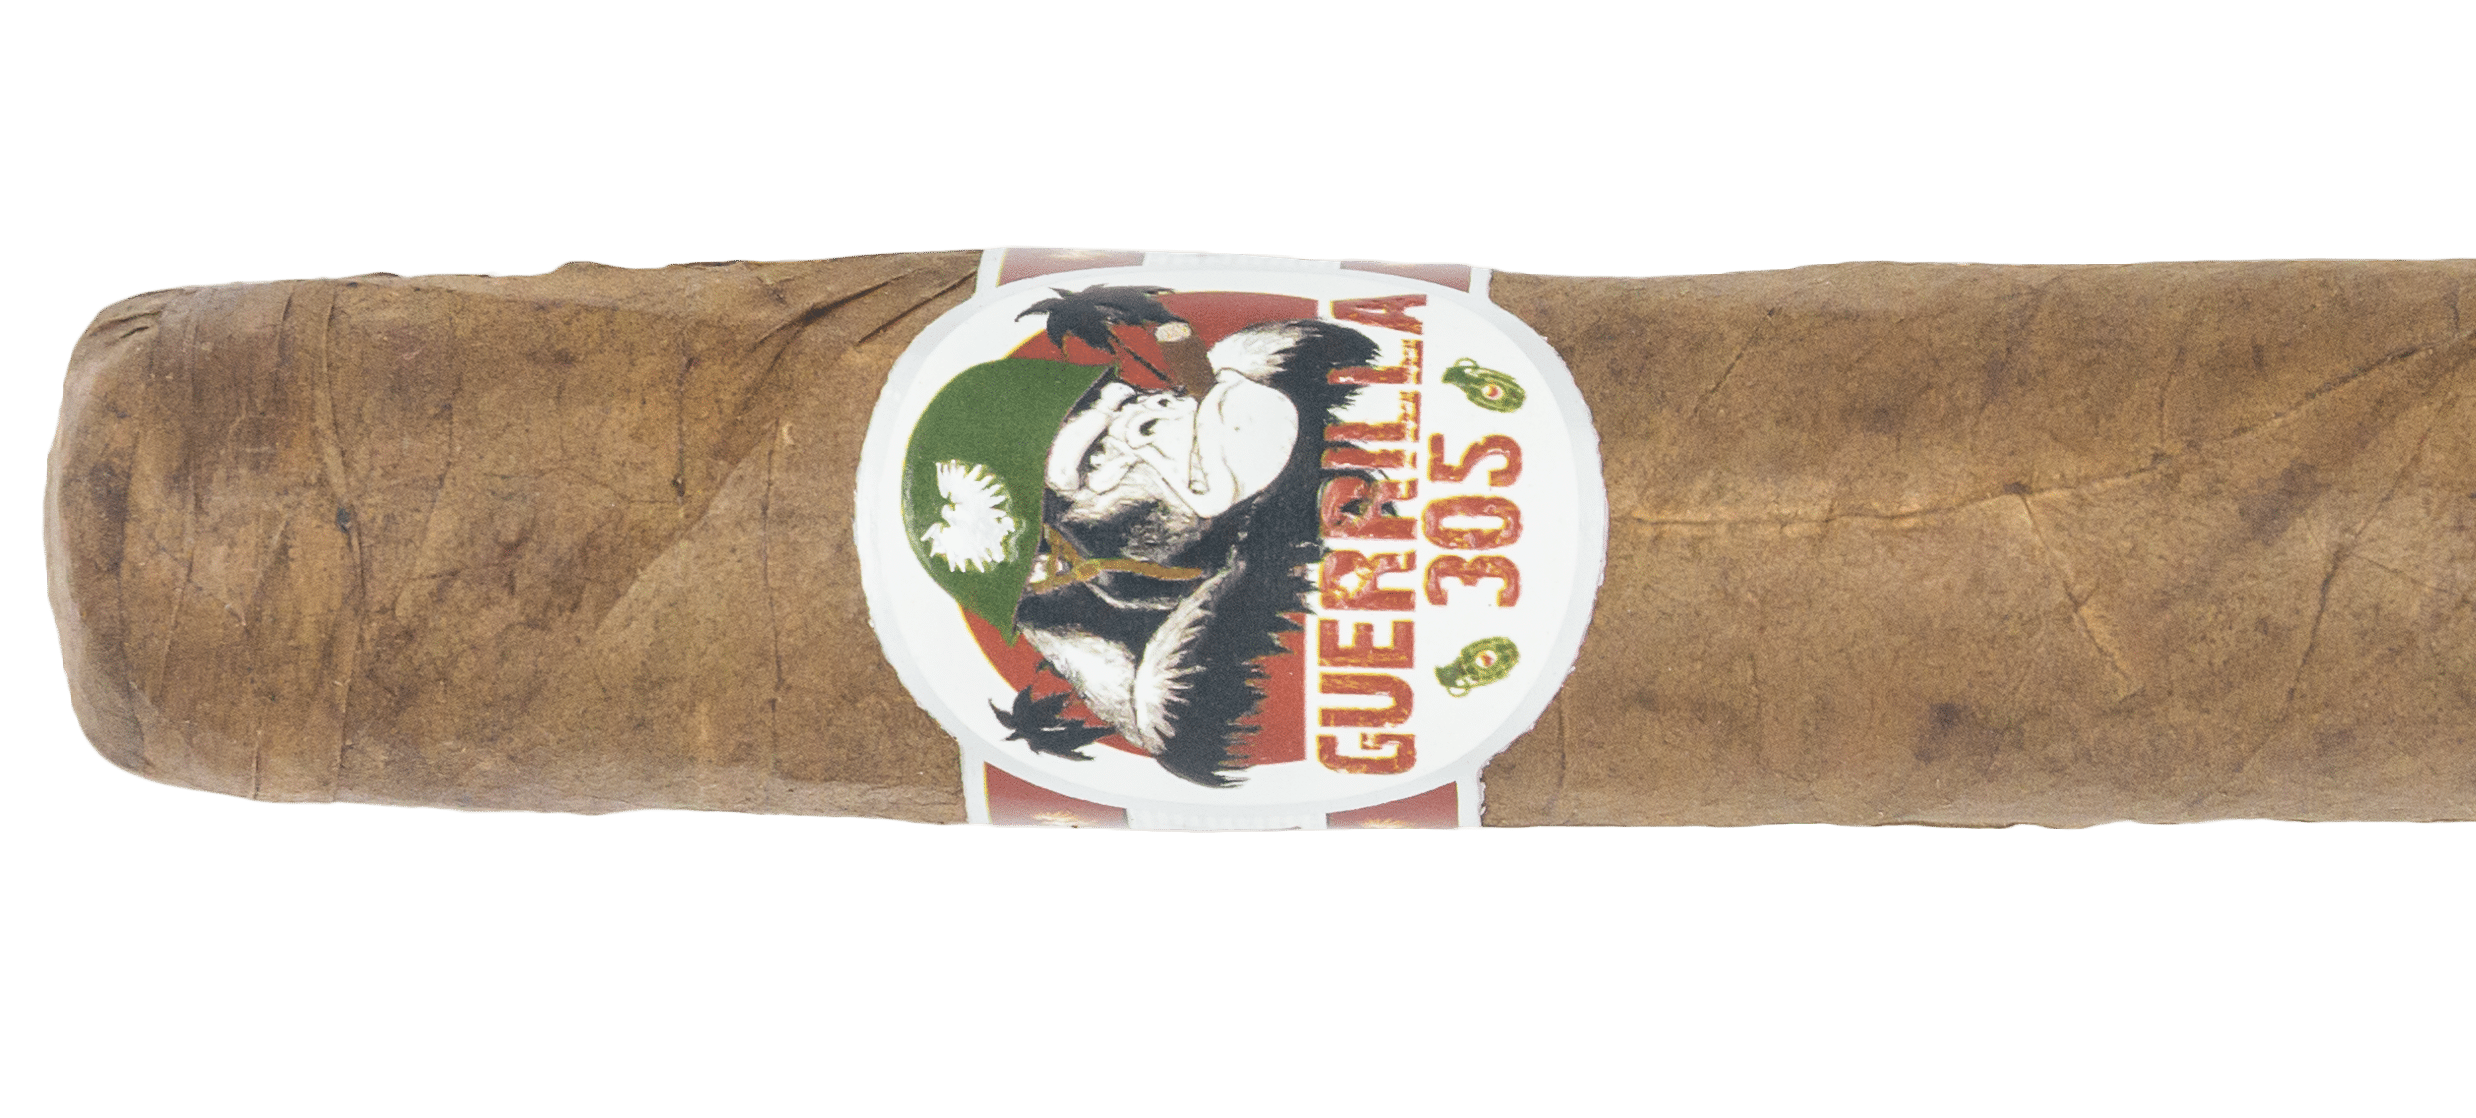 Tarazona Guerrilla 305 Propaganda - Blind Cigar Review